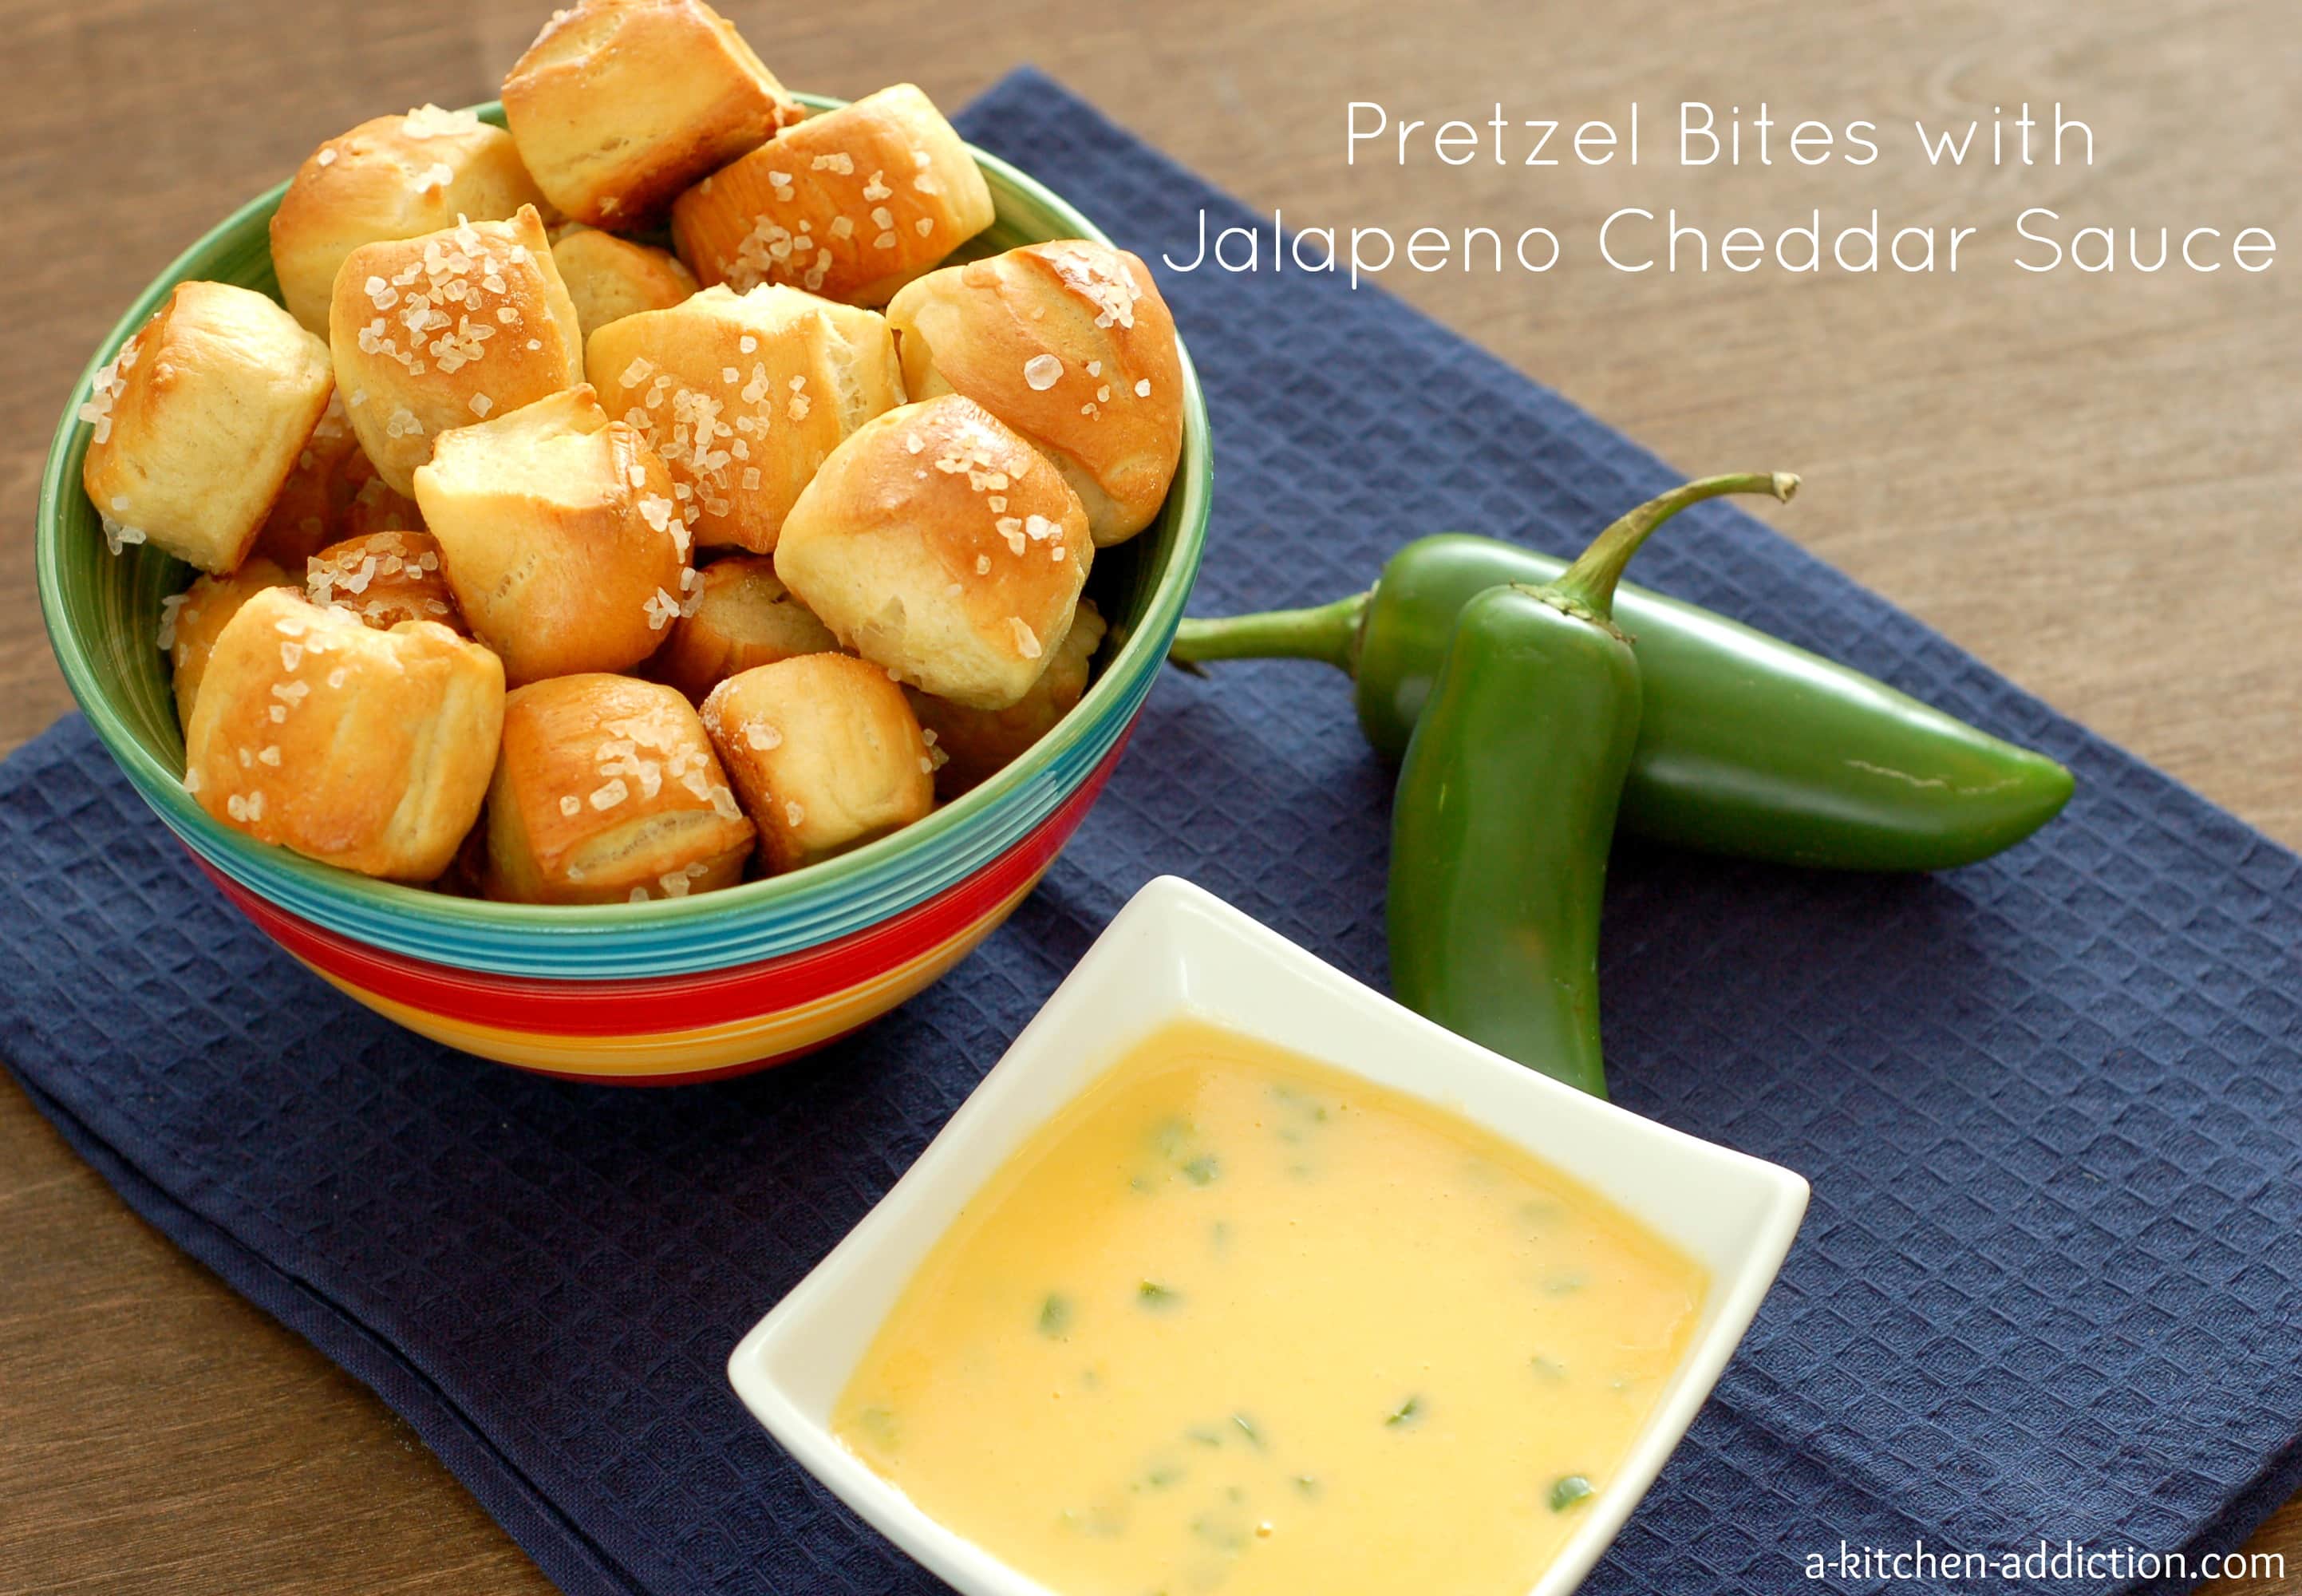 https://www.a-kitchen-addiction.com/wp-content/uploads/2013/02/pretzel-bites-jalapeno-sauce-w-words.jpg